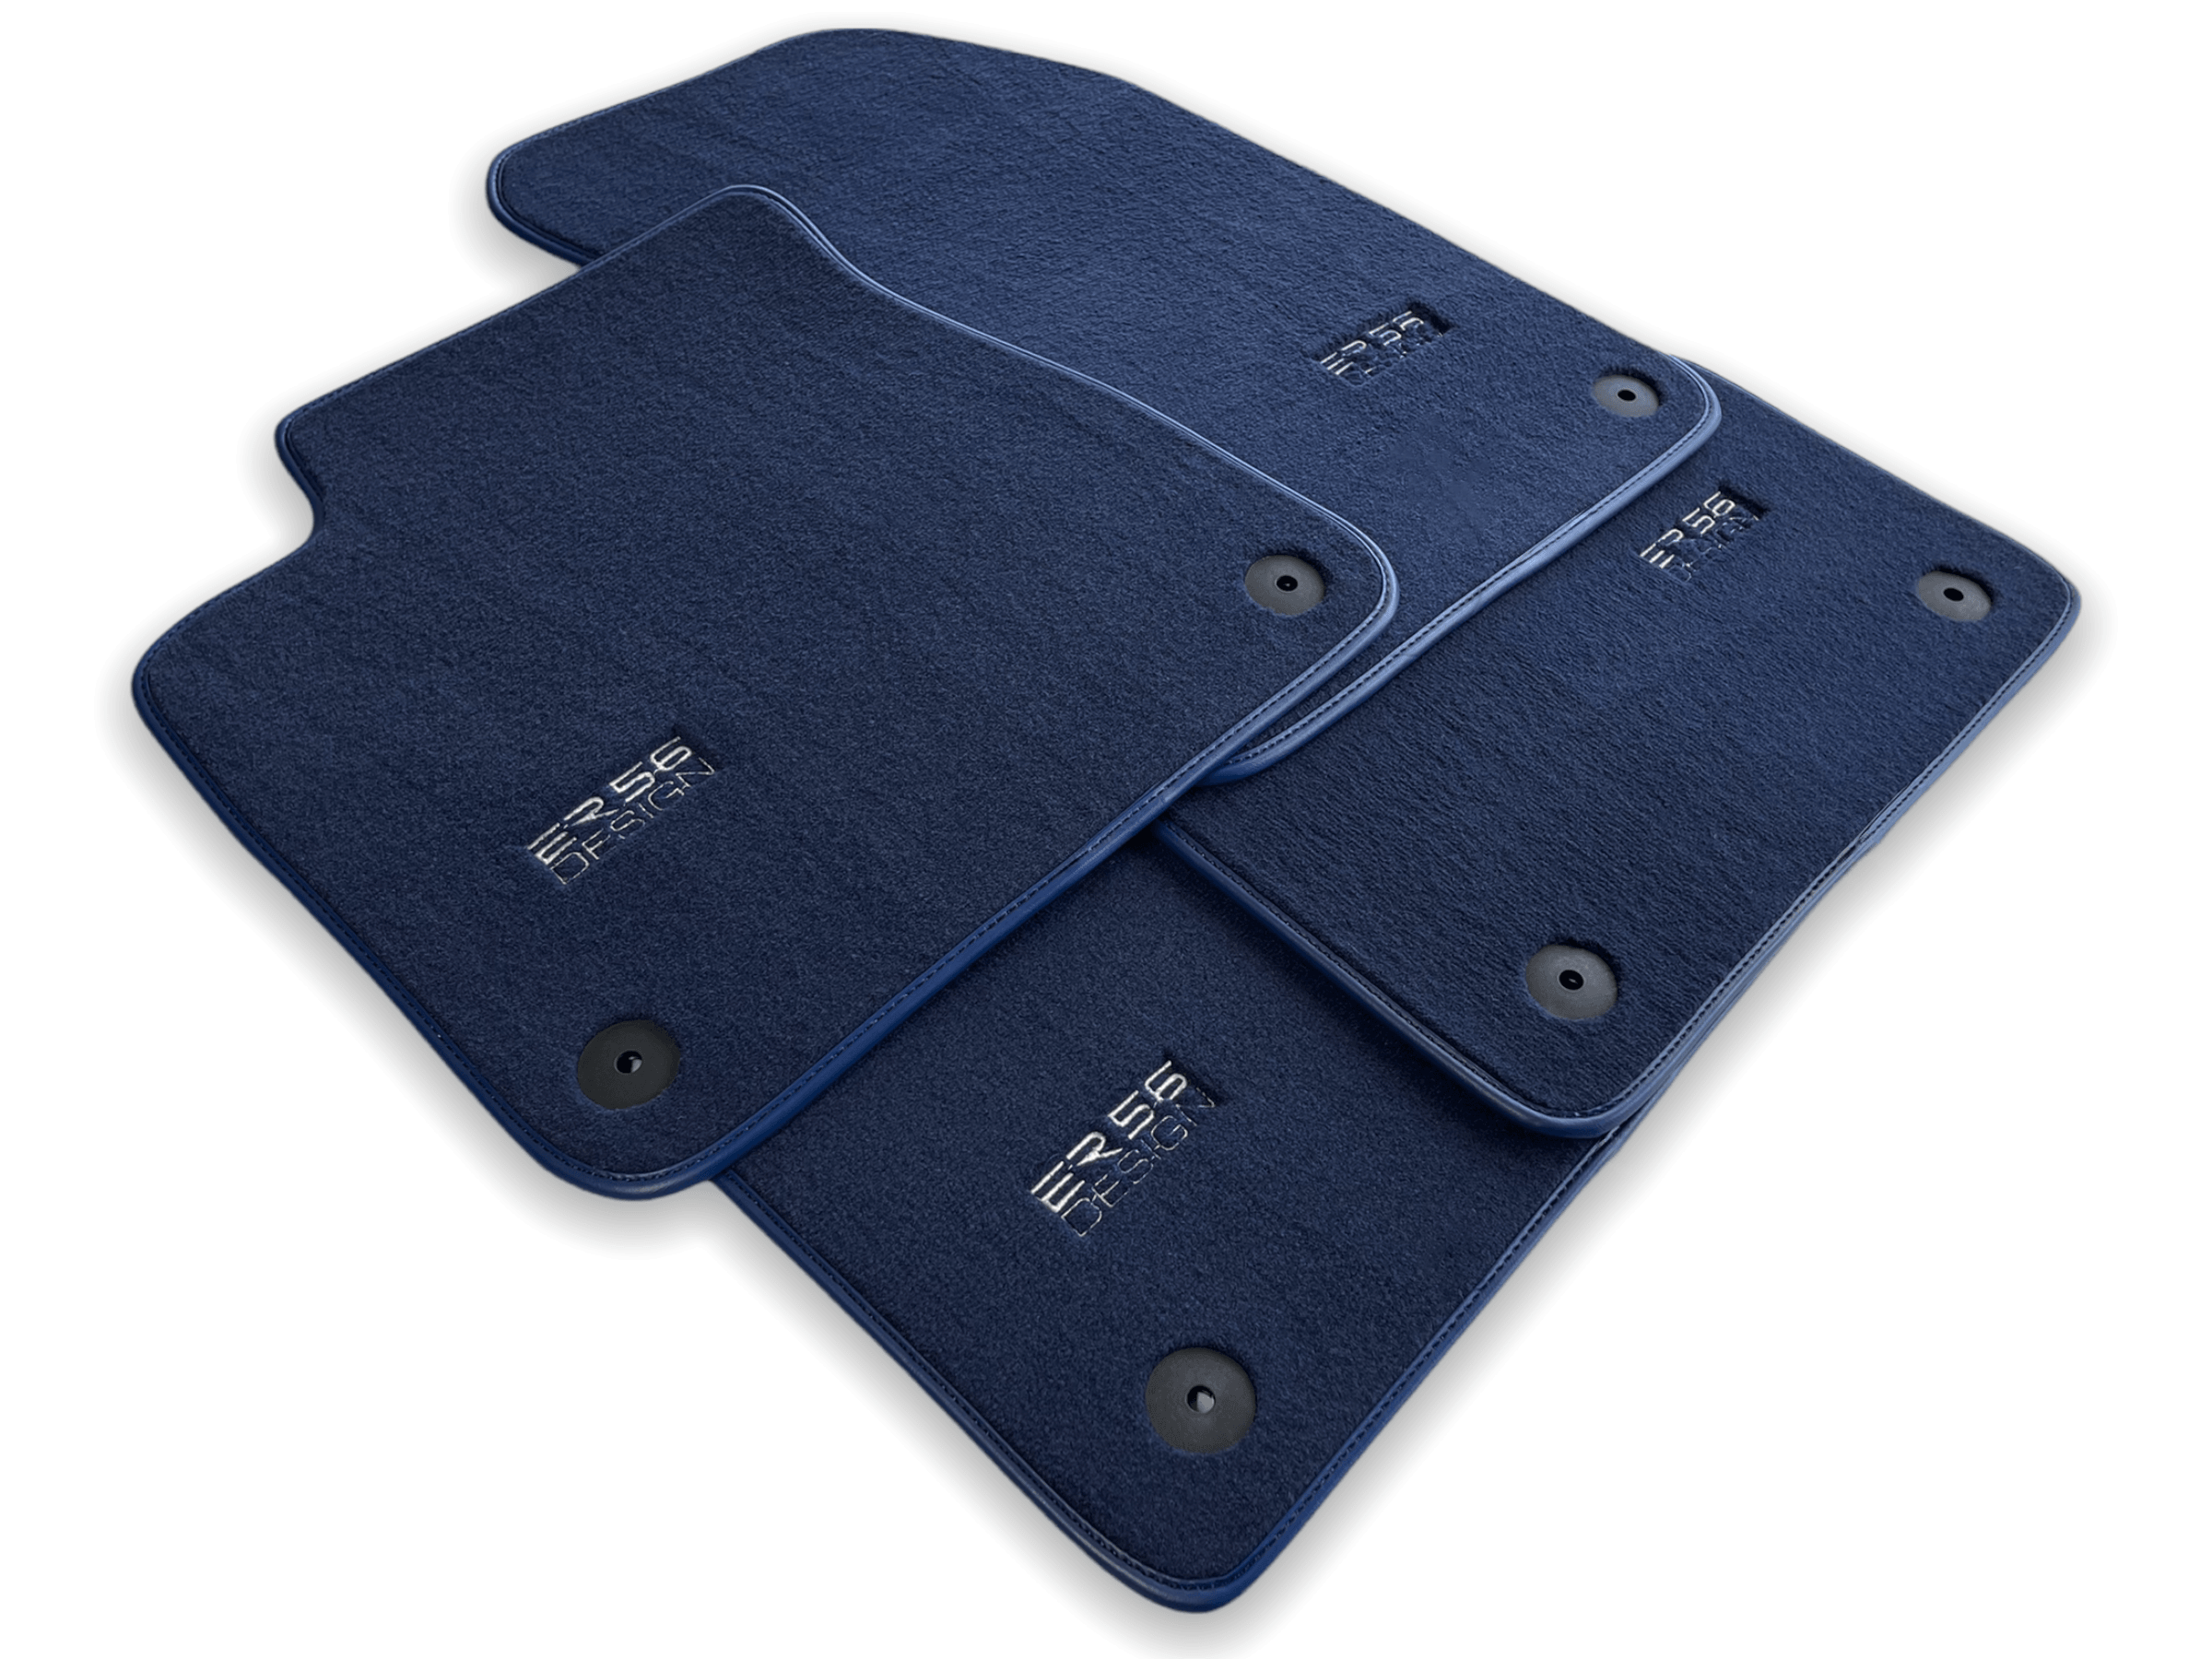 Dark Blue Floor Mats for Audi A4 - B8 Allroad Quattro (2008-2015) | ER56 Design